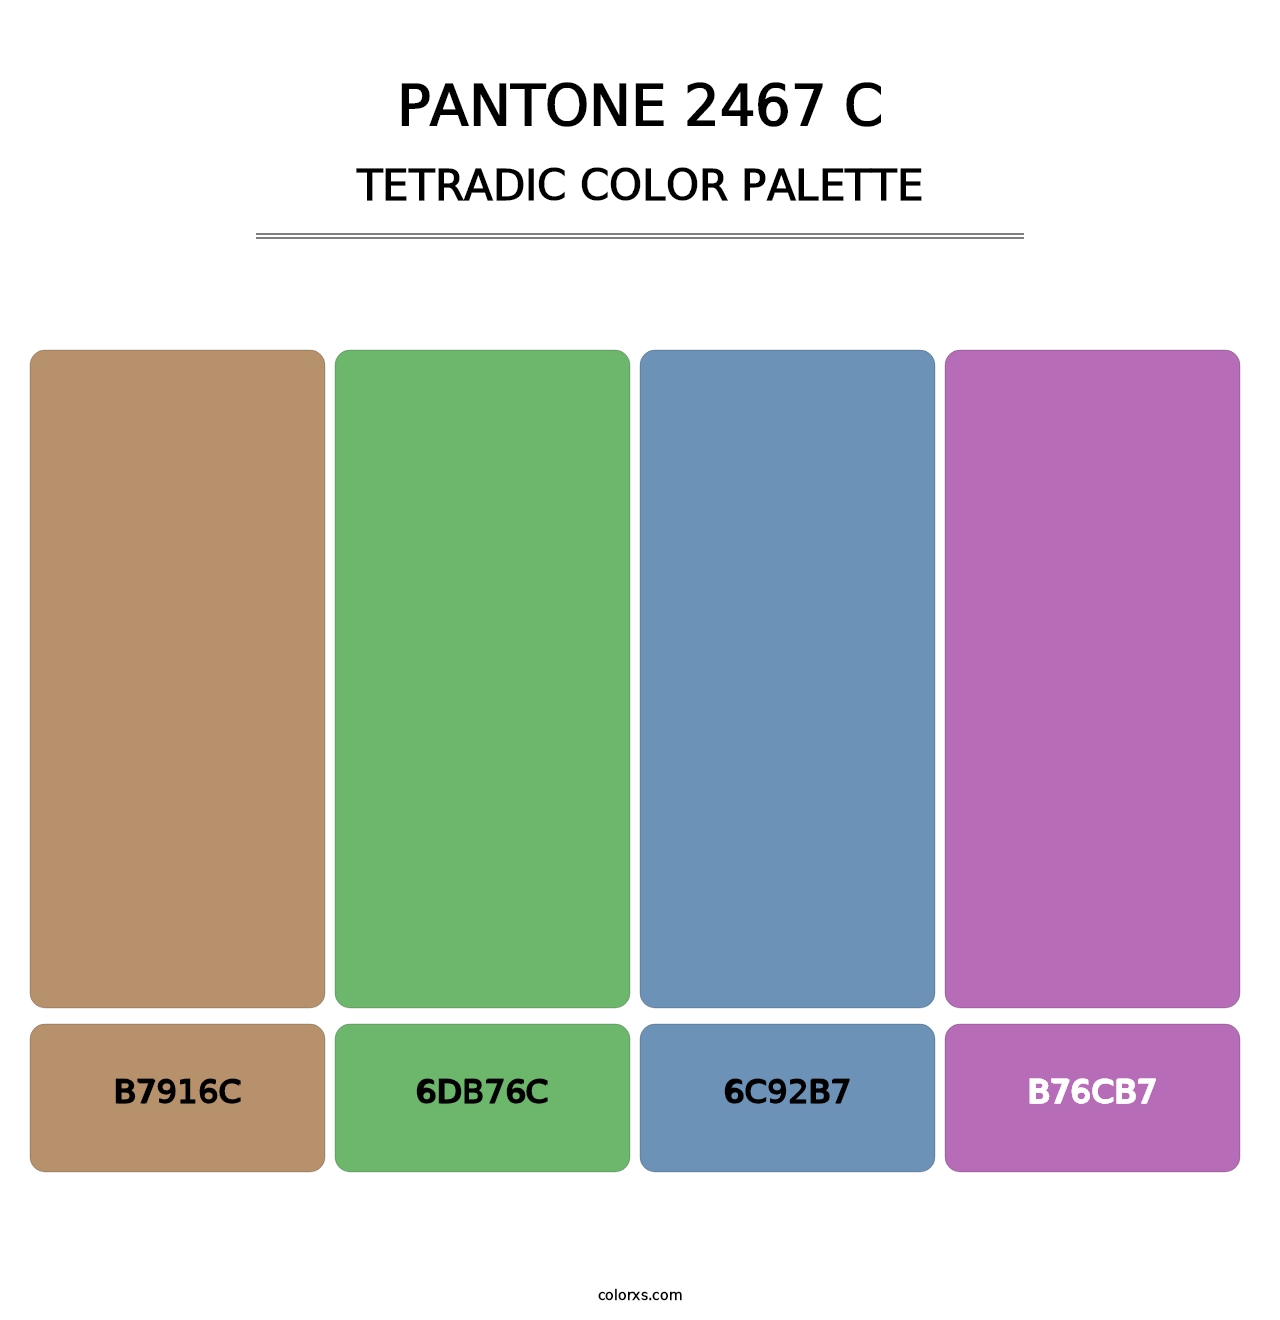 PANTONE 2467 C - Tetradic Color Palette